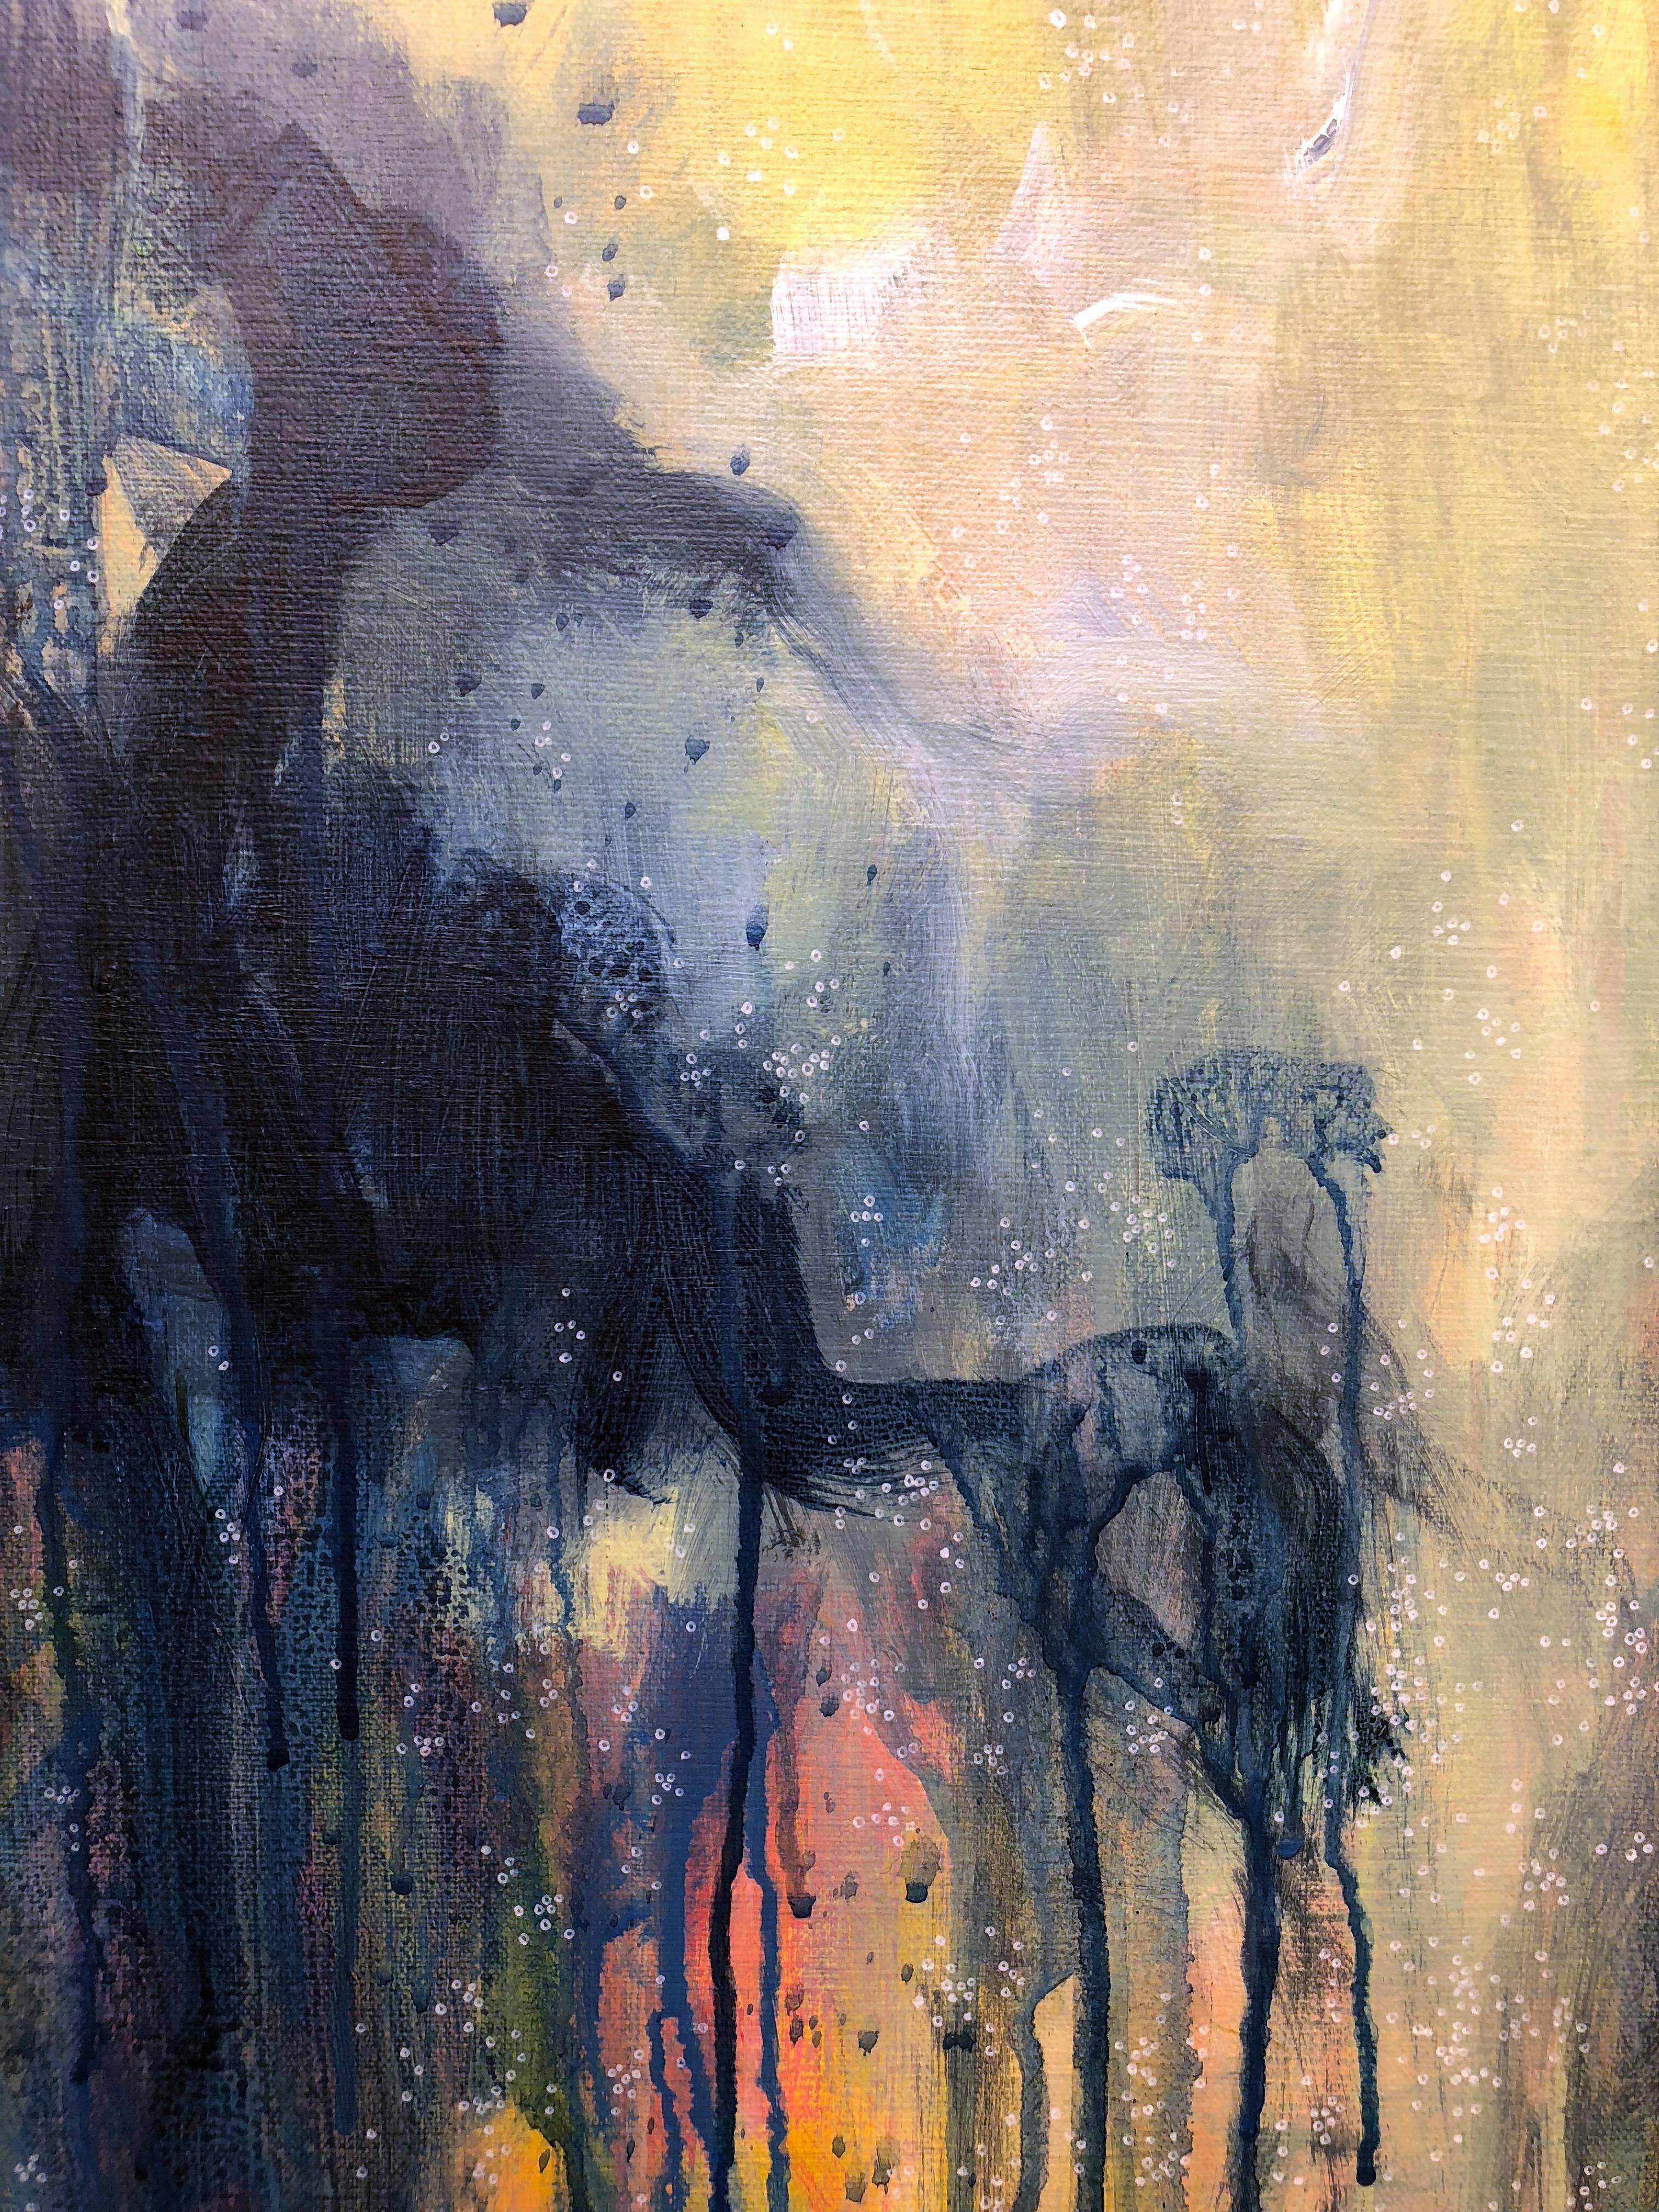 Break Through - Gray Abstract Painting by Jana Emburey